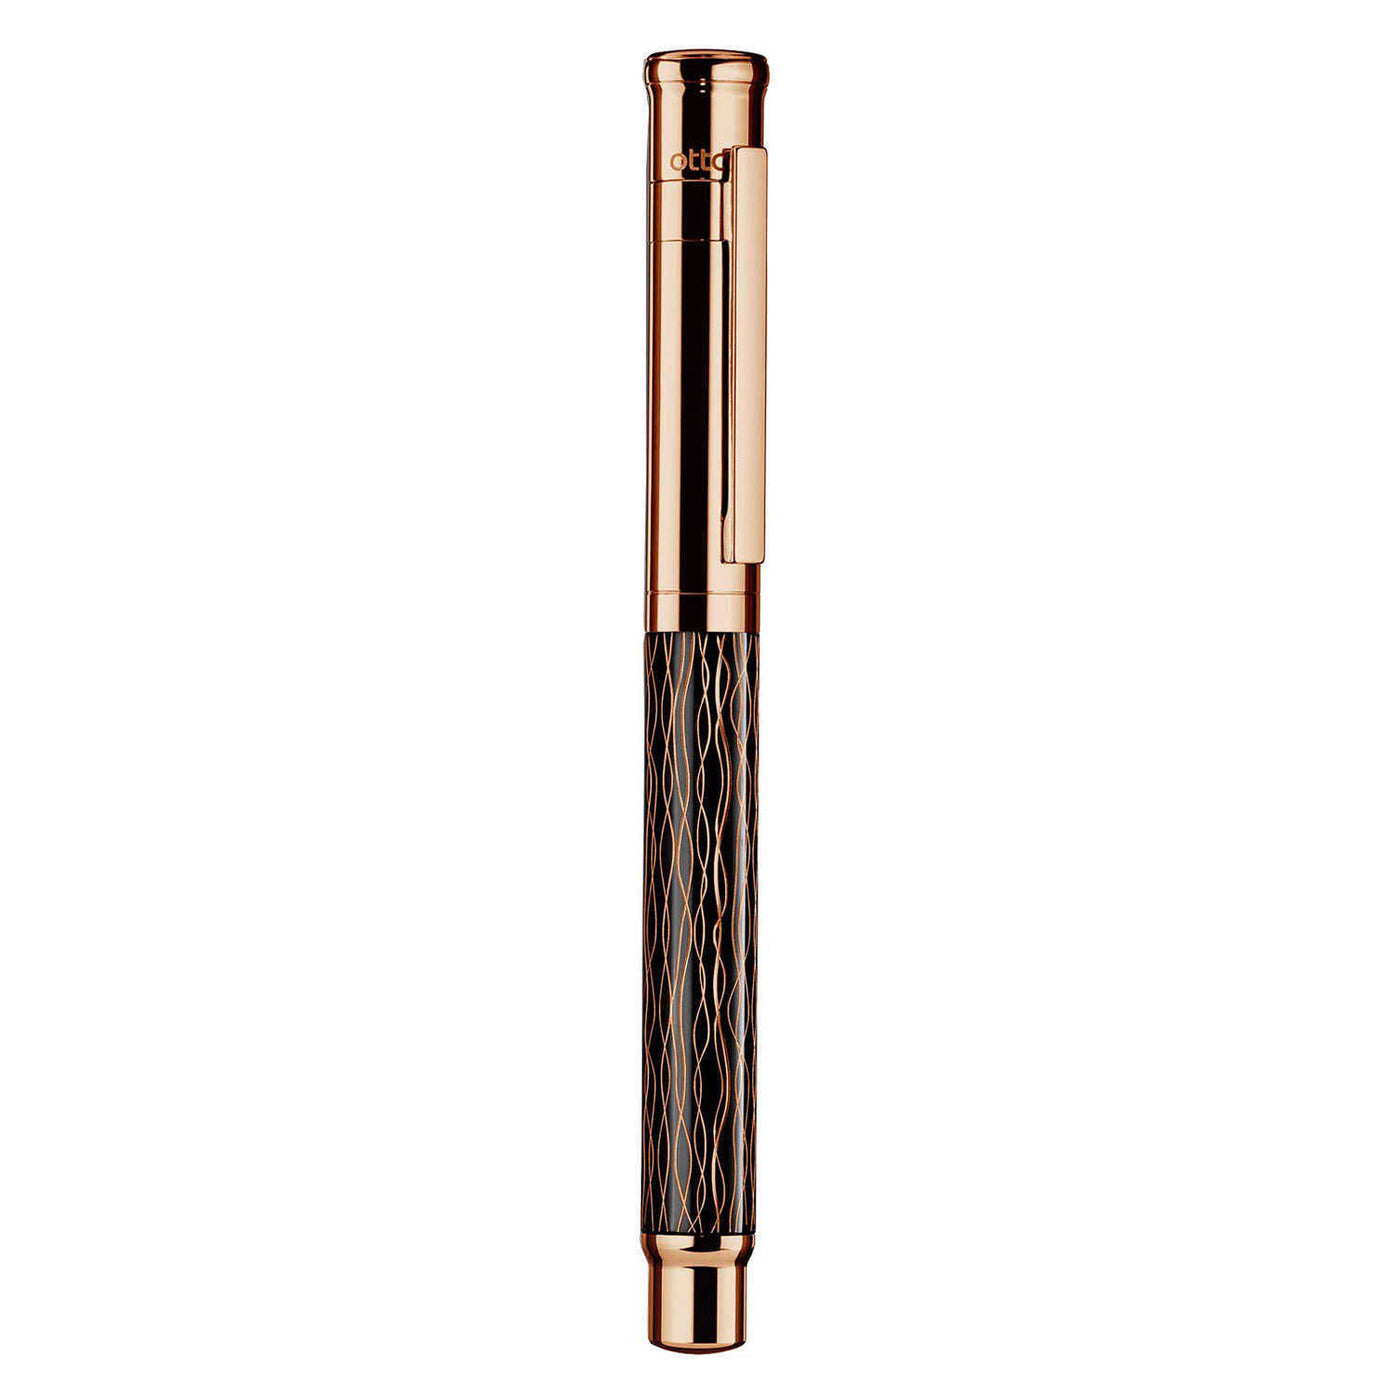 Otto Hutt Design 04 Fountain Pen, Grooved Black Rose Gold - 18K Gold Nib